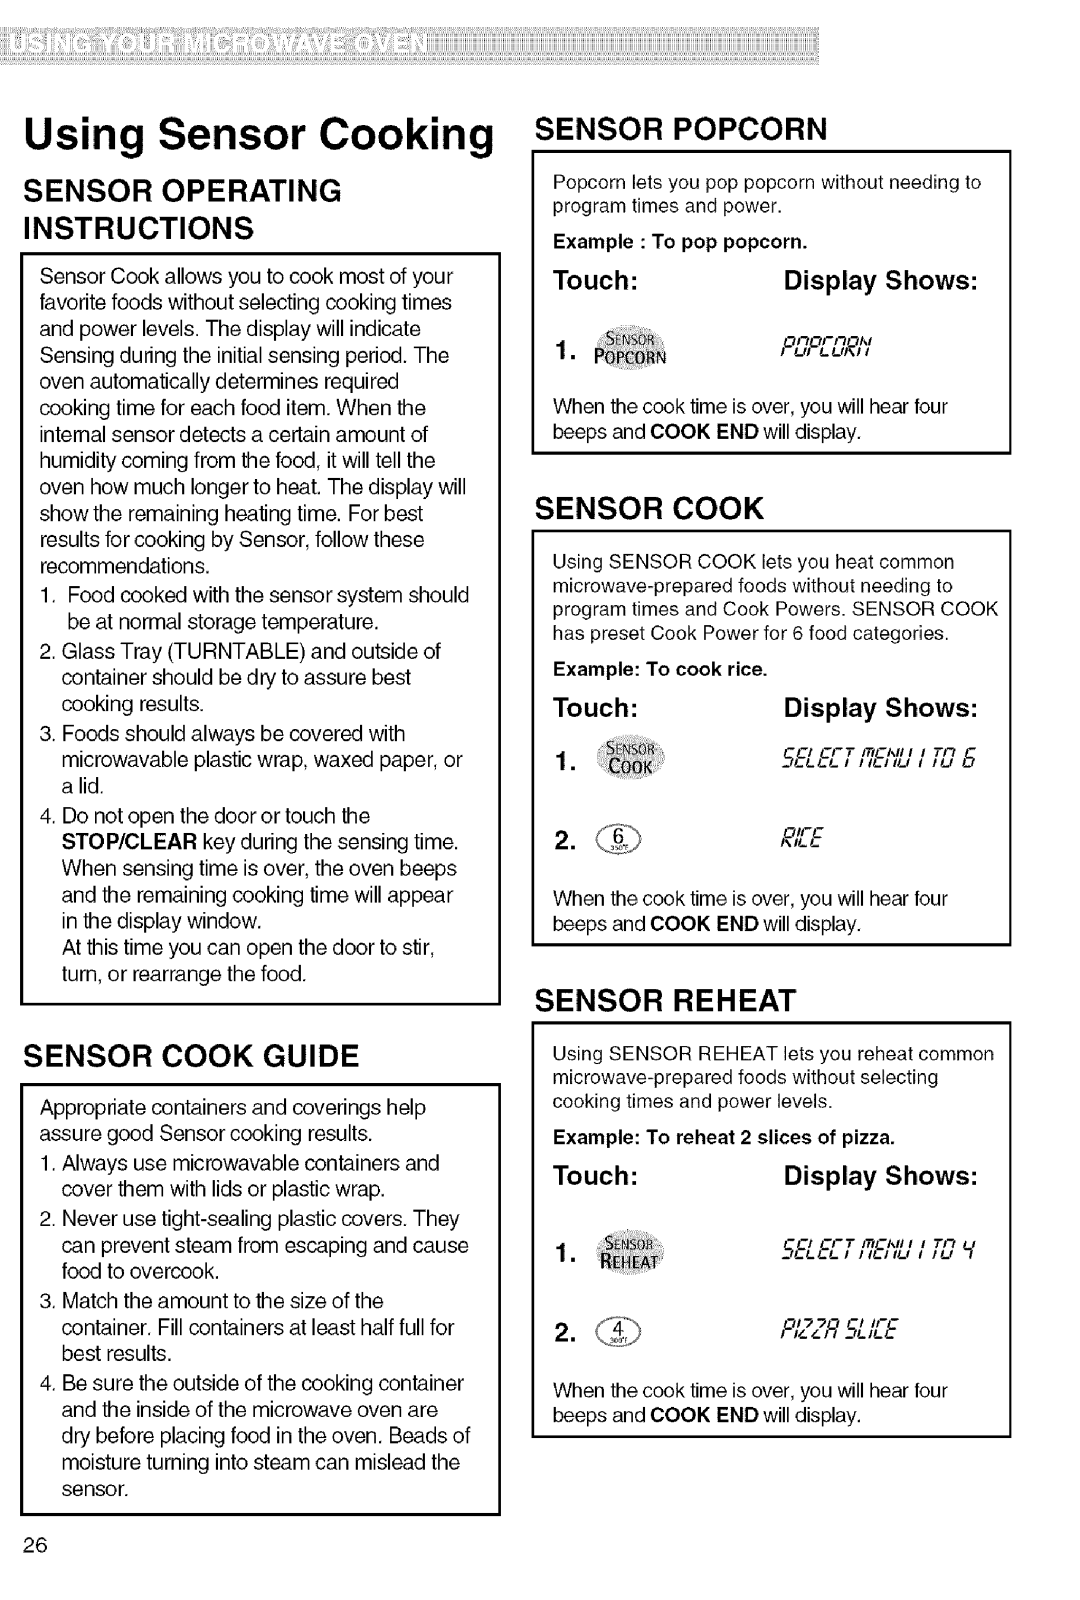 Kenmore 721.80822 Sensor Operating Instructions, Sensor Cook Guide, Sensor Popcorn, Sensor Reheat, I L, Touch, Display 